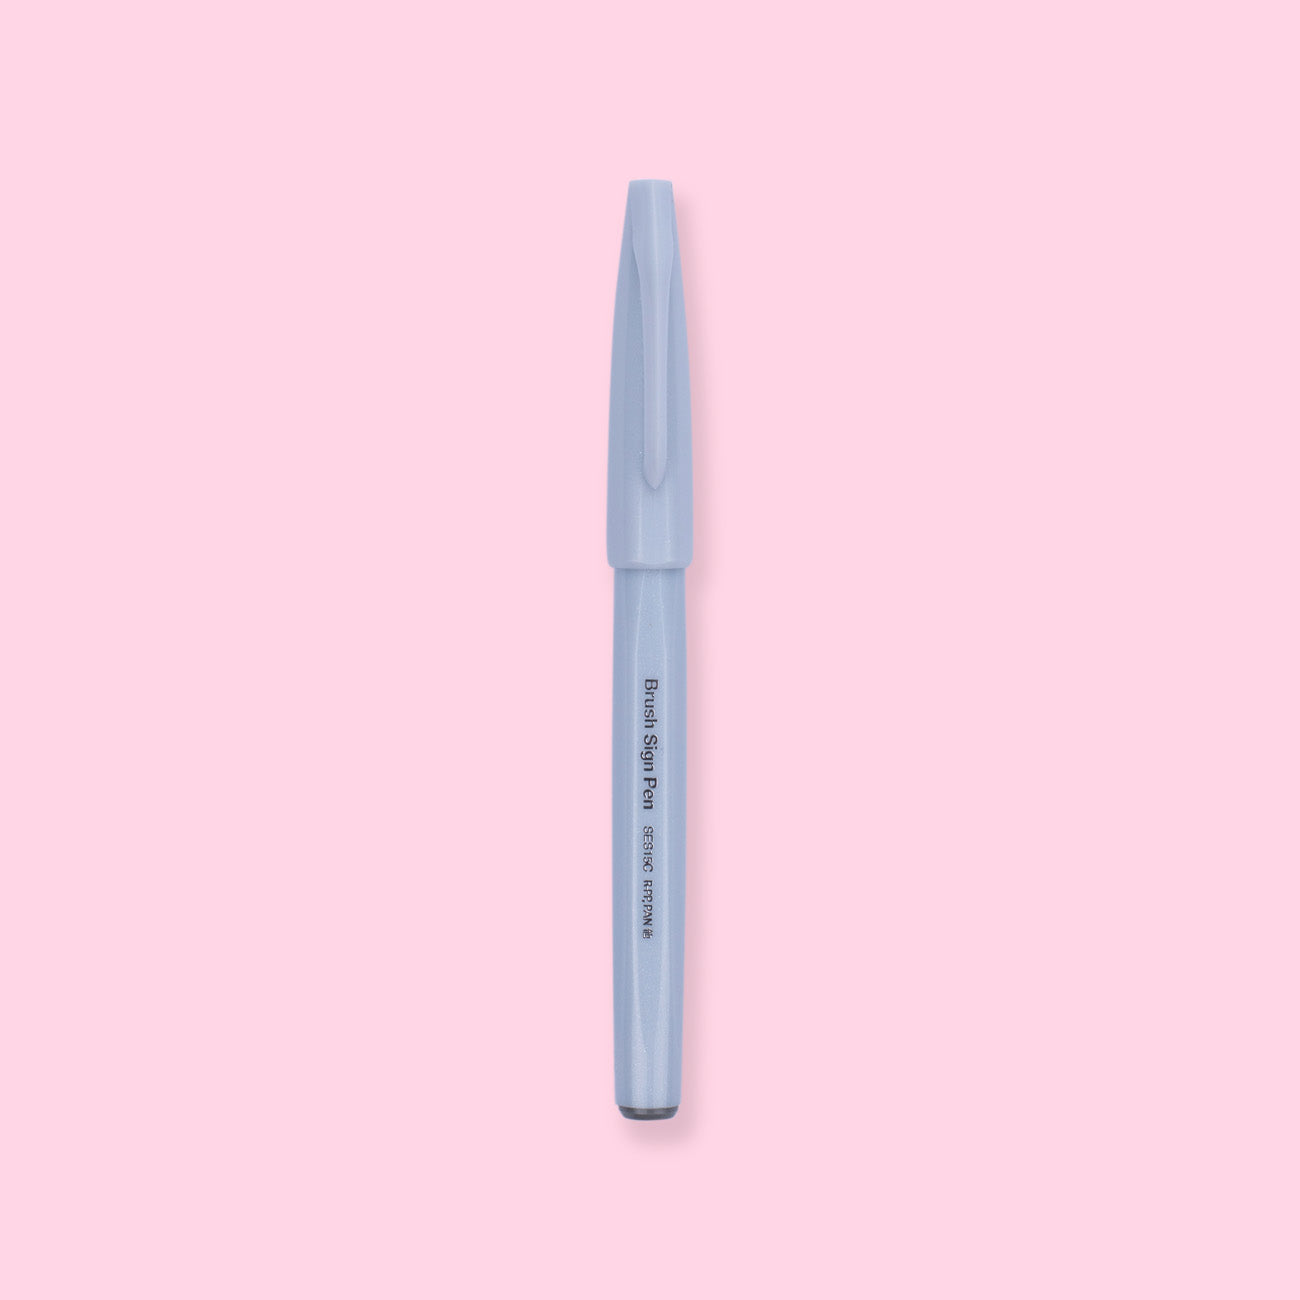 Pentel Fude Touch Brush Sign Pen - Light Gray - 2020 New Colors